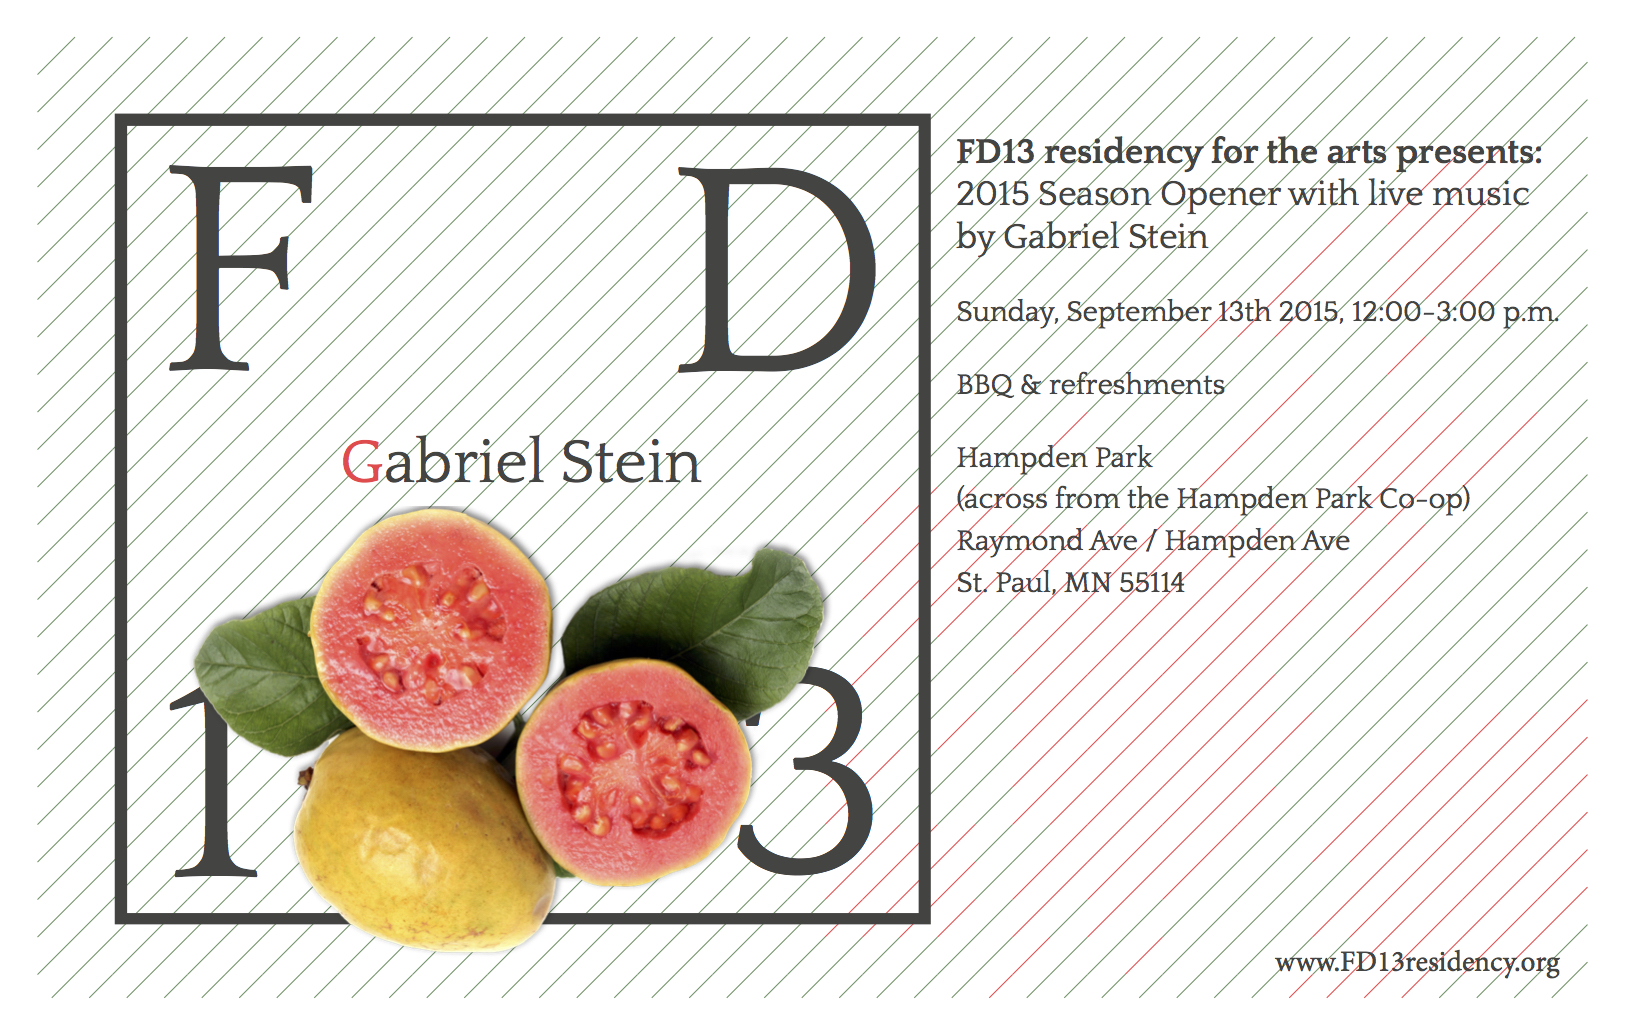 FD13 Season Opener with live music by Gabriel Stein :: feat. Kramarczuk sausages